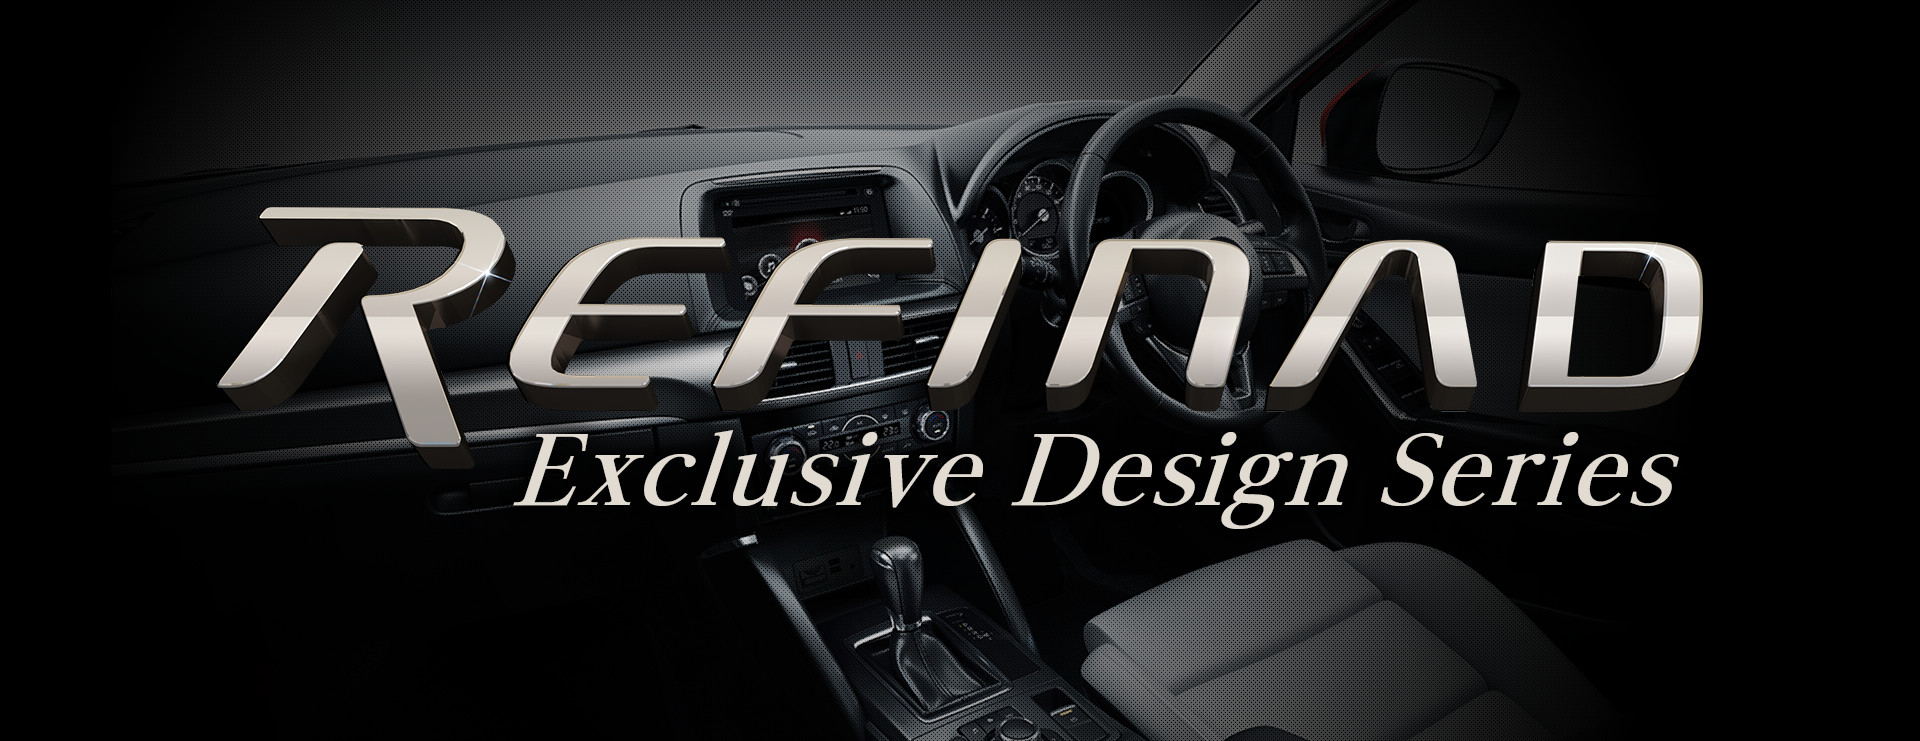 refinadex logo - Exclusive Design Series